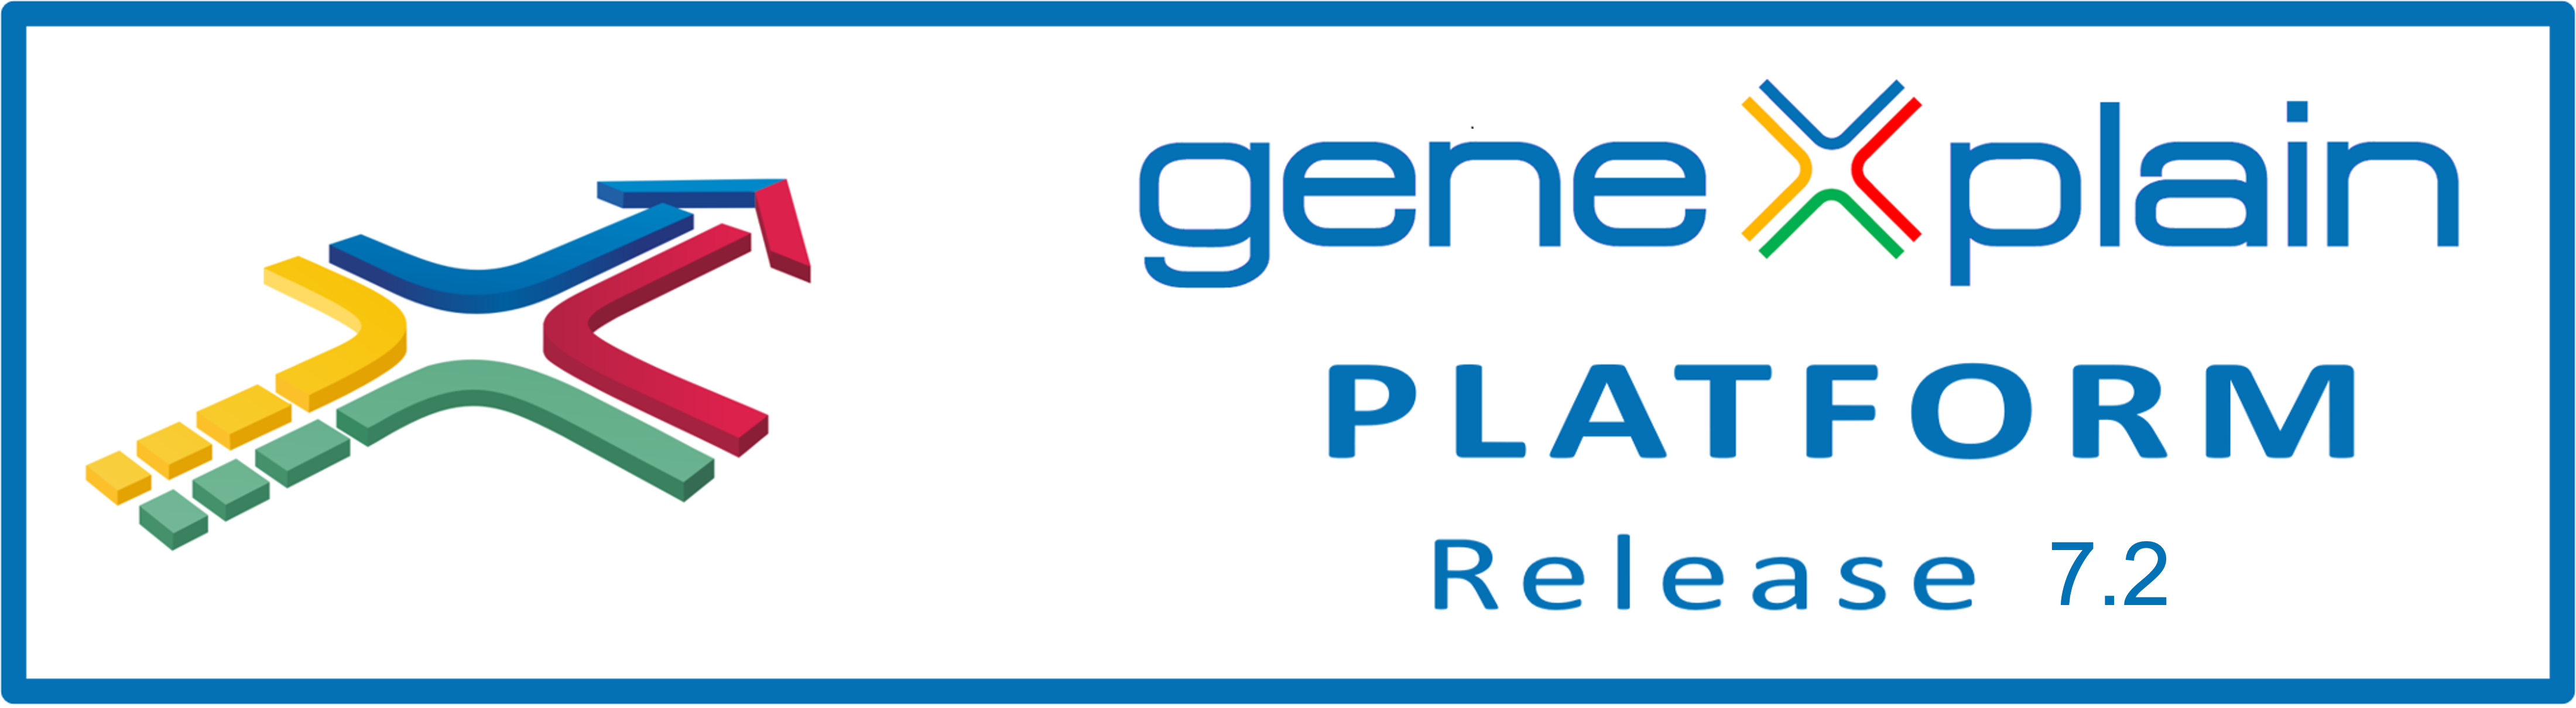 geneXplain platform release 7.2